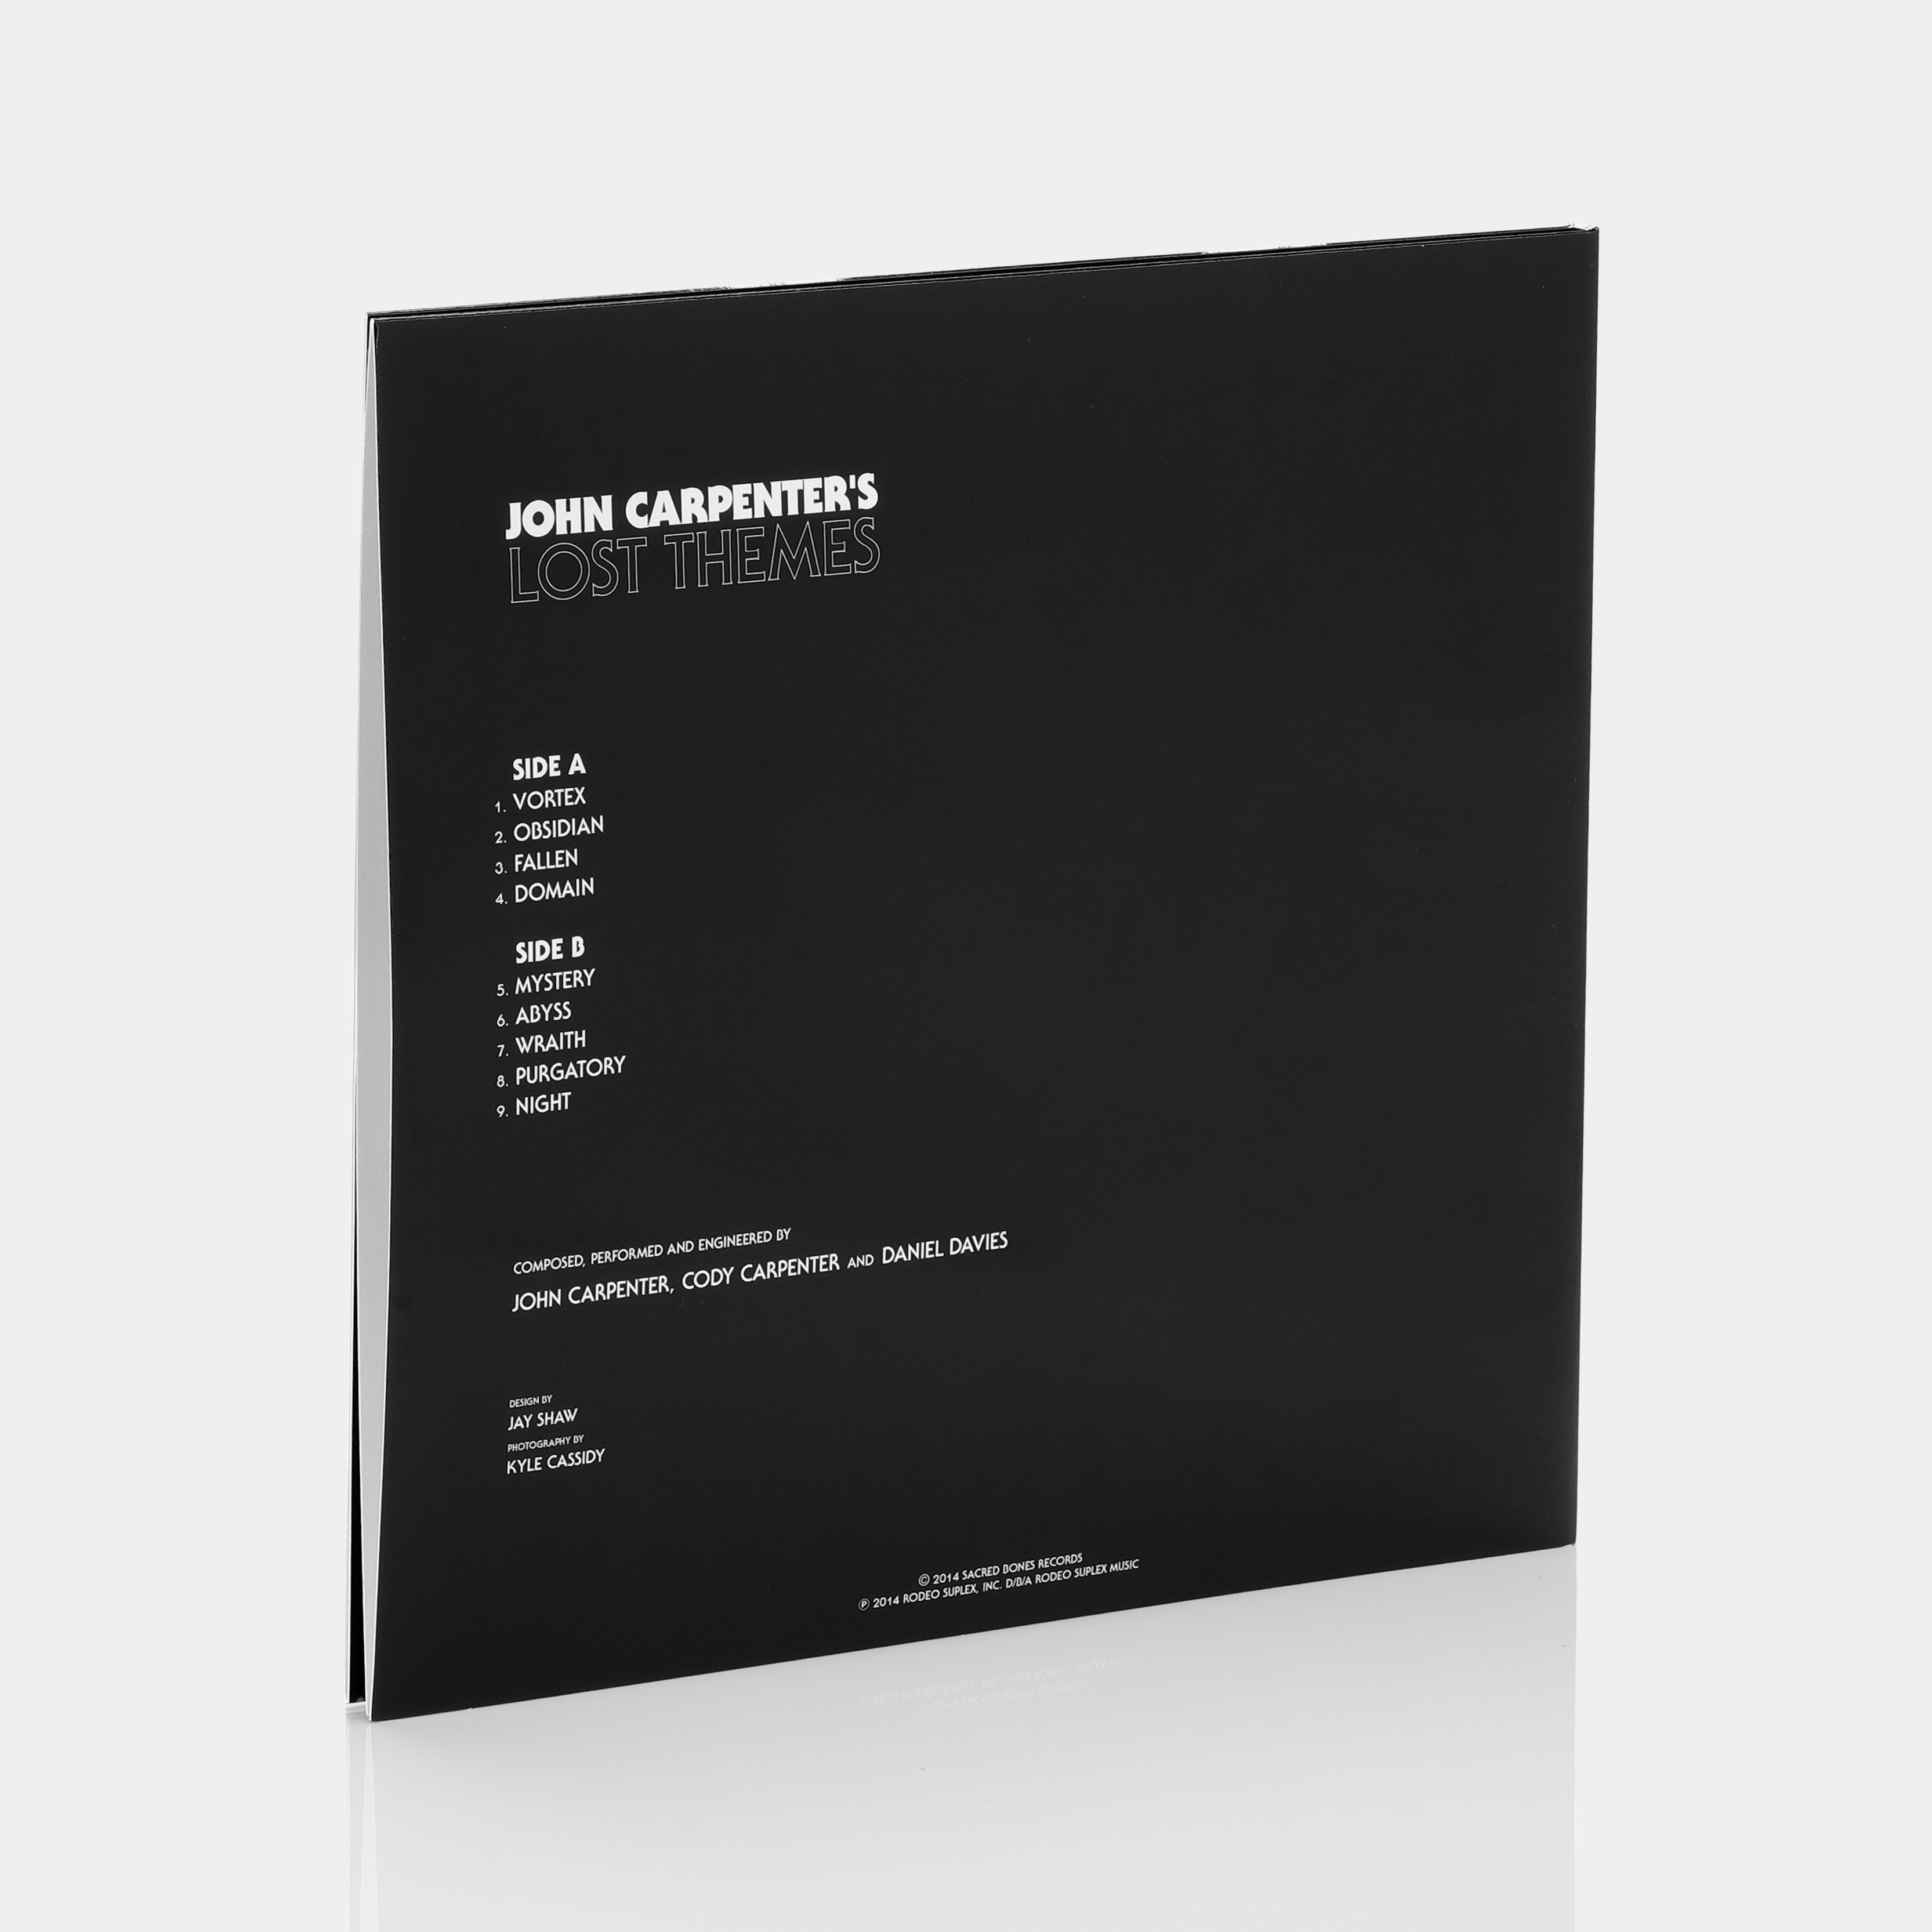 John Carpenter - Lost Themes LP Red Smoke Vinyl Record